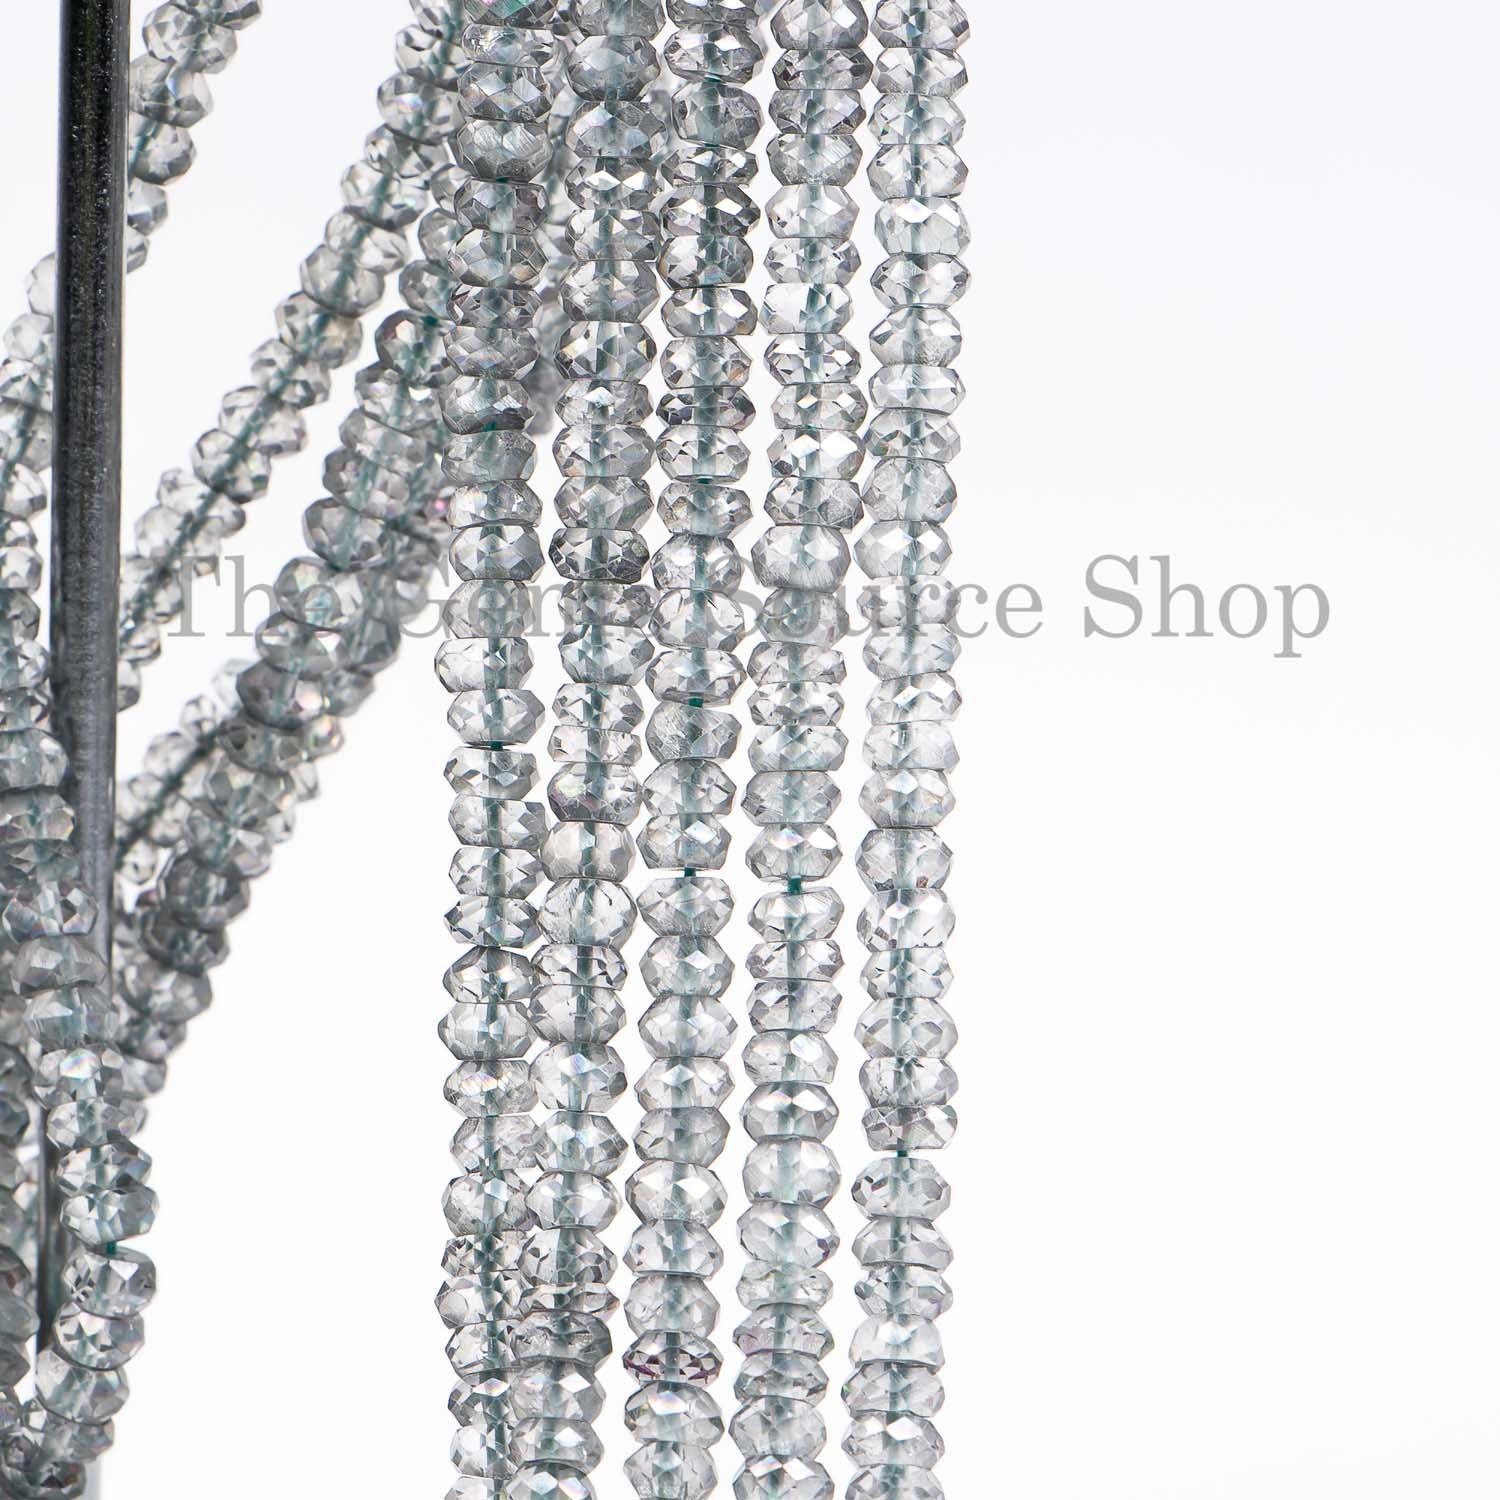 Mystic Topaz Faceted Rondelle Shape Gemstone Beads